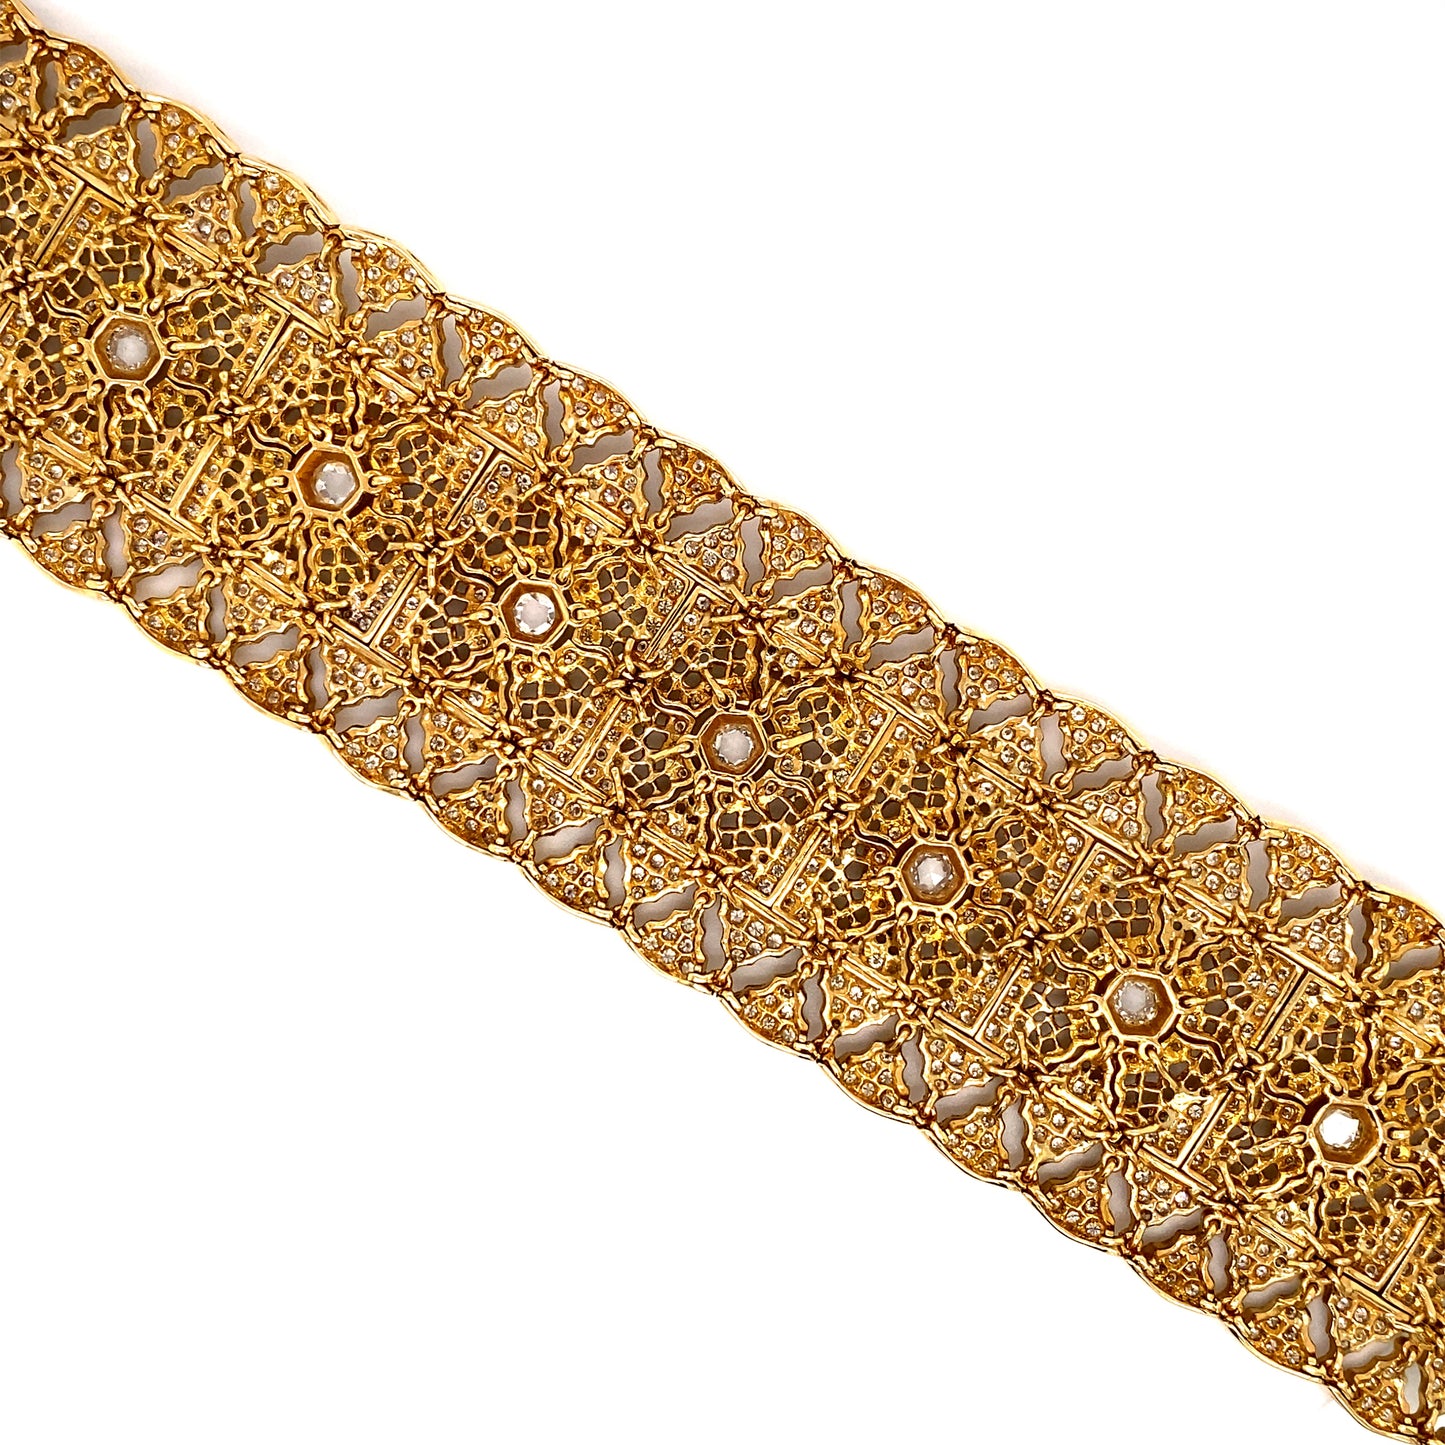 Circa 1980 10.72 Carat Diamond Wide Flexible Cuff Bracelet in 18 Karat Gold